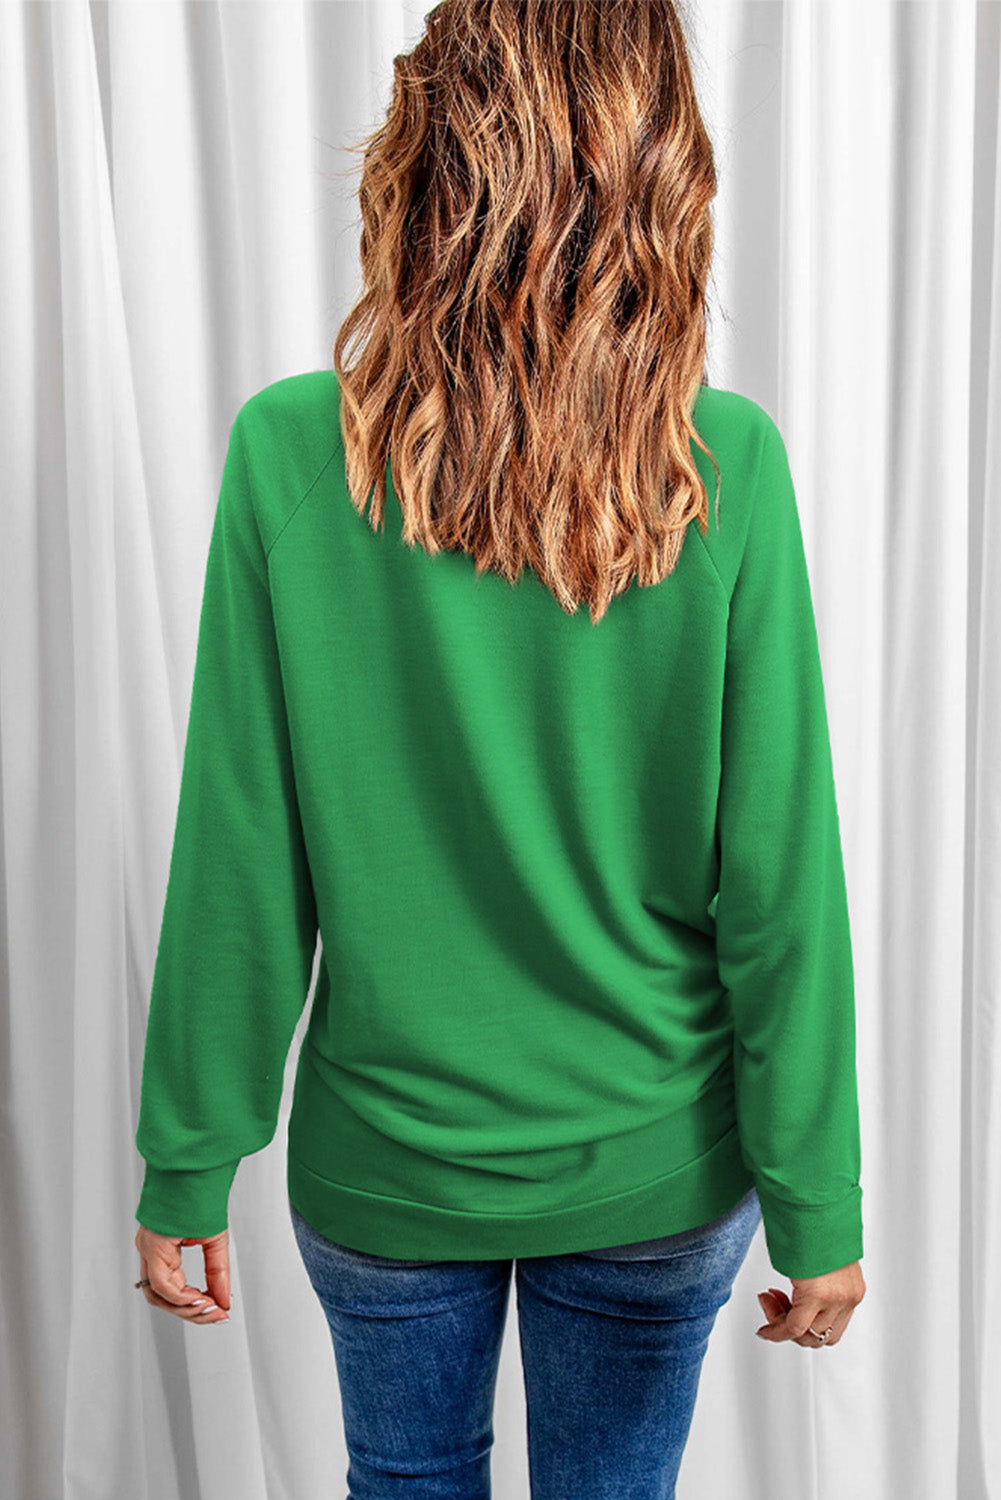 Green LOVE Clover Print Raglan Sleeve Pullover Sweatshirt Graphic Sweatshirts JT's Designer Fashion